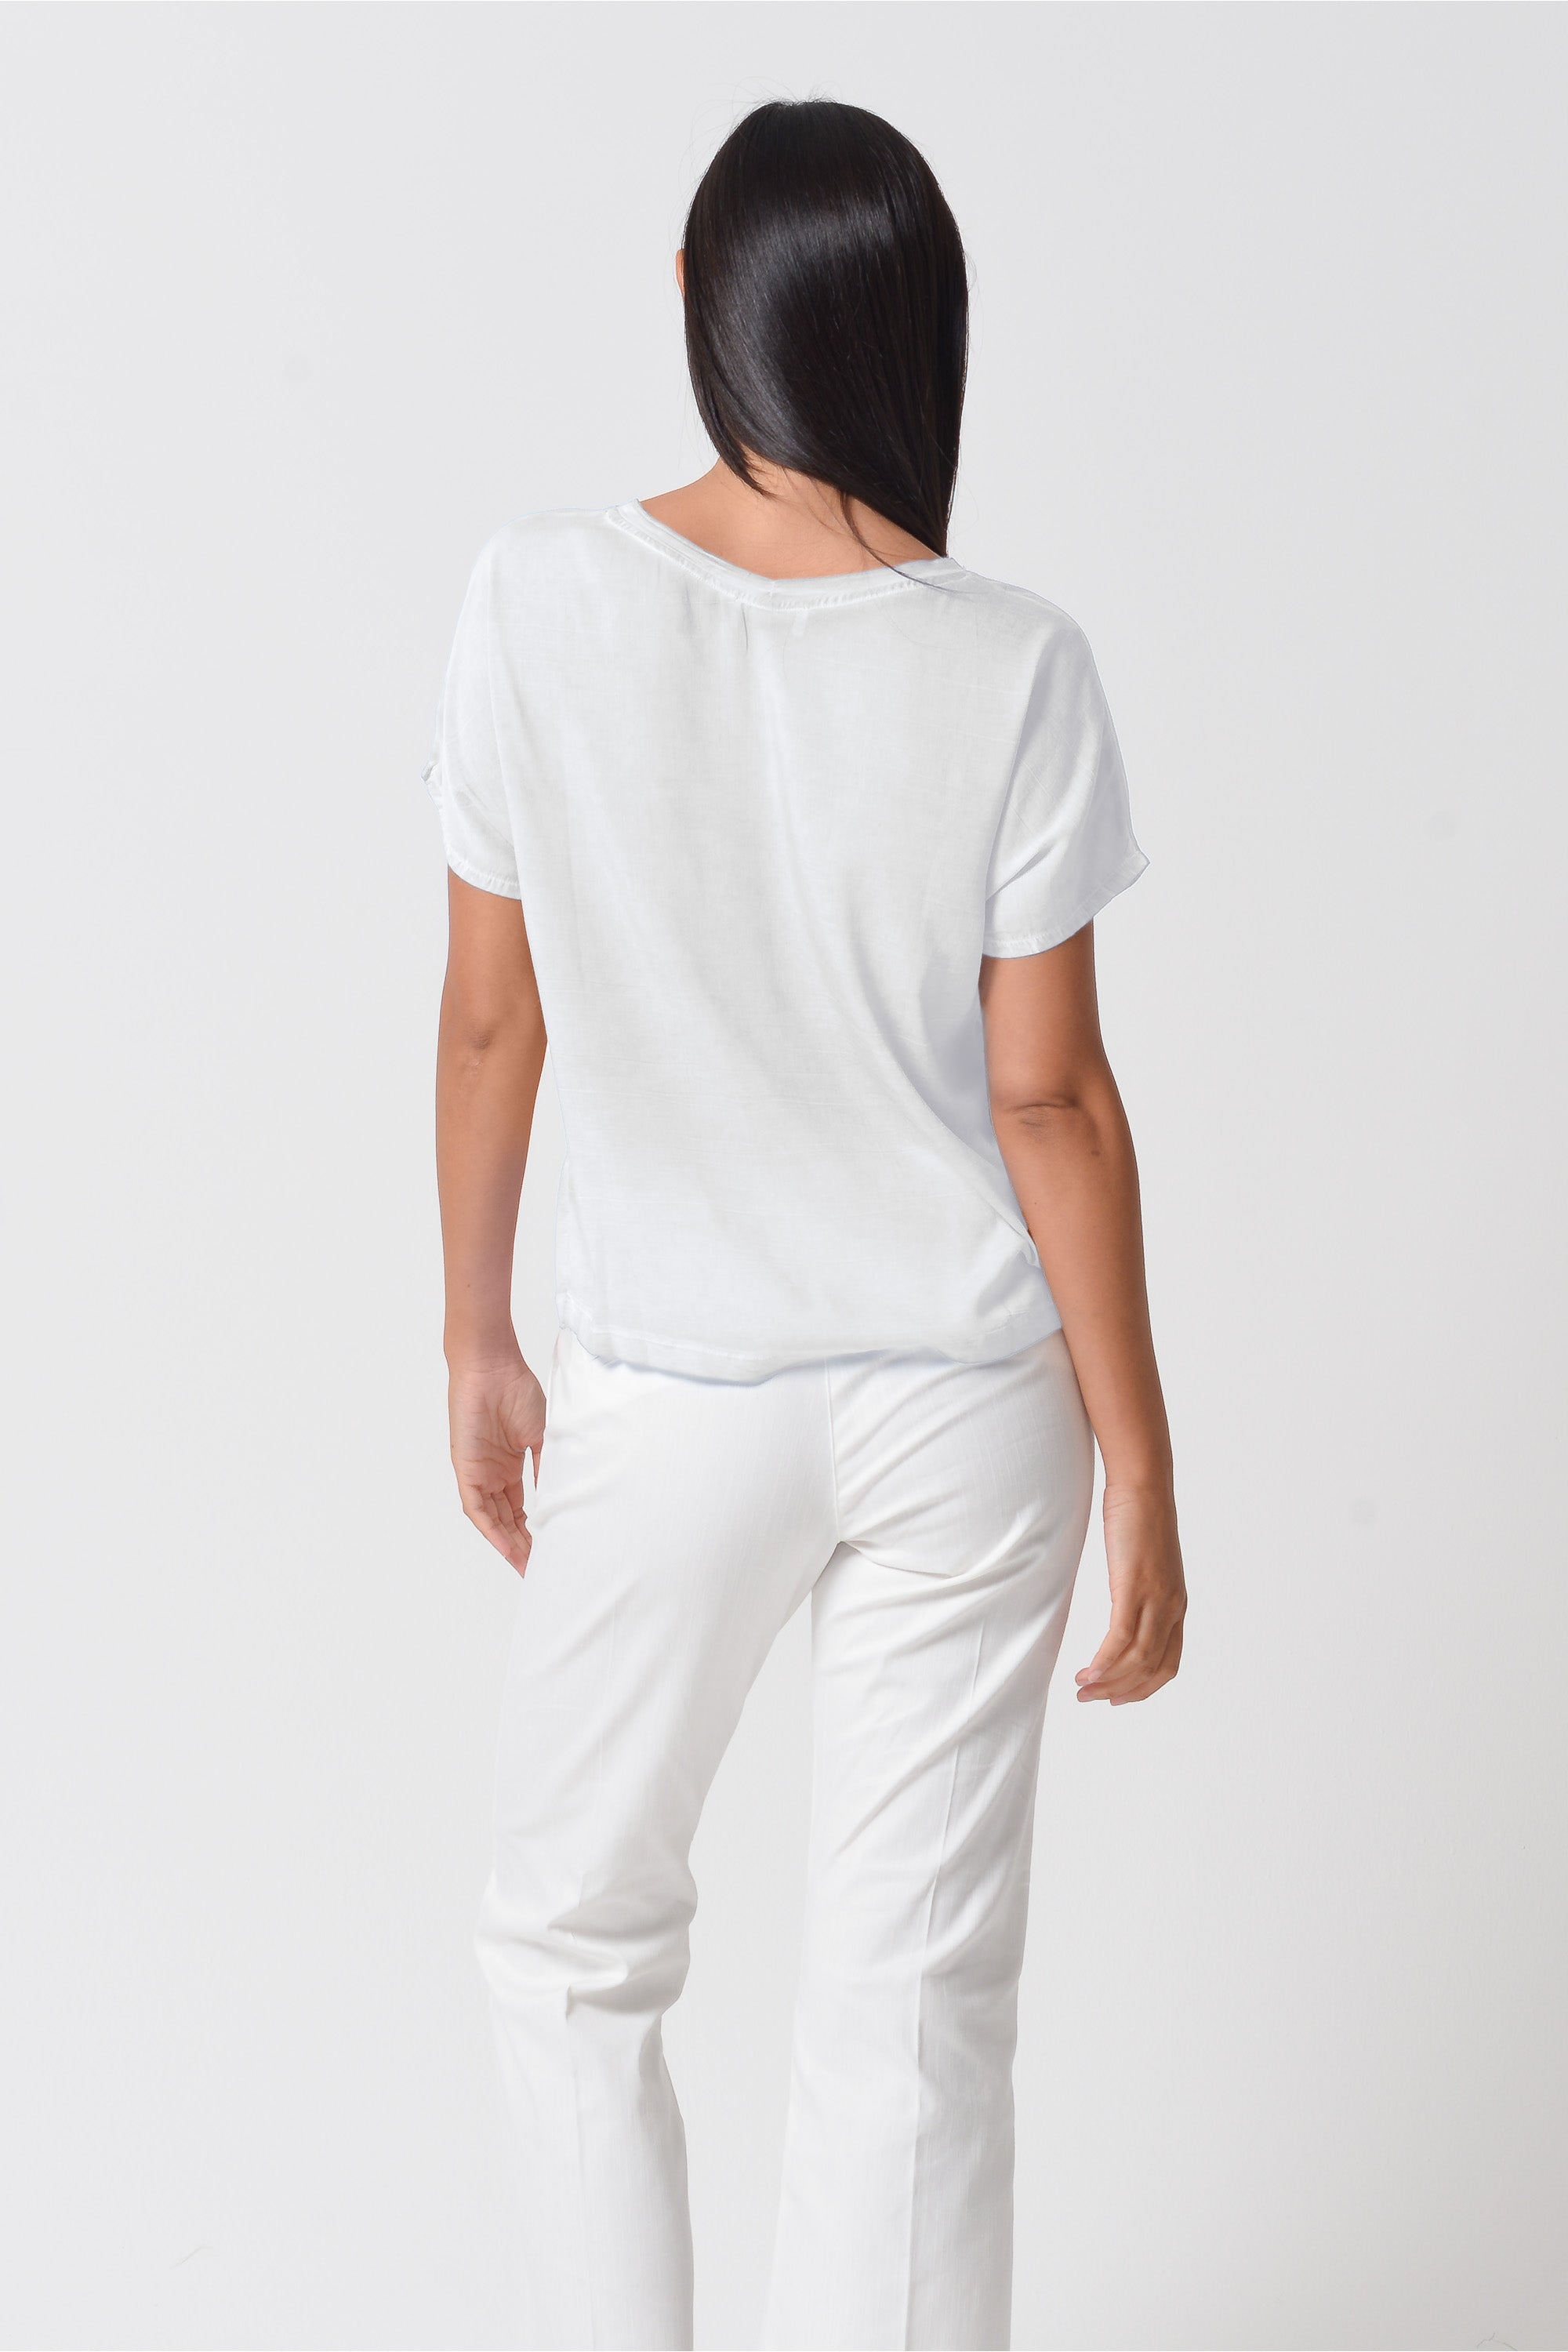 Vado T-Shirt - White